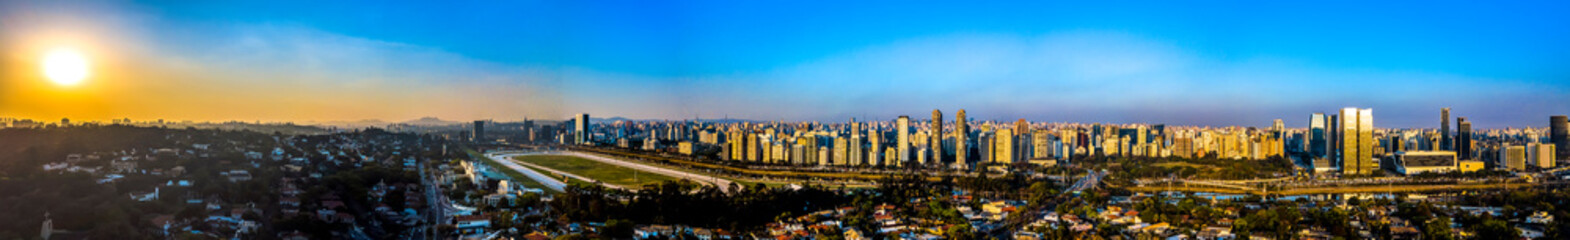 Skyline  urbano panoramica